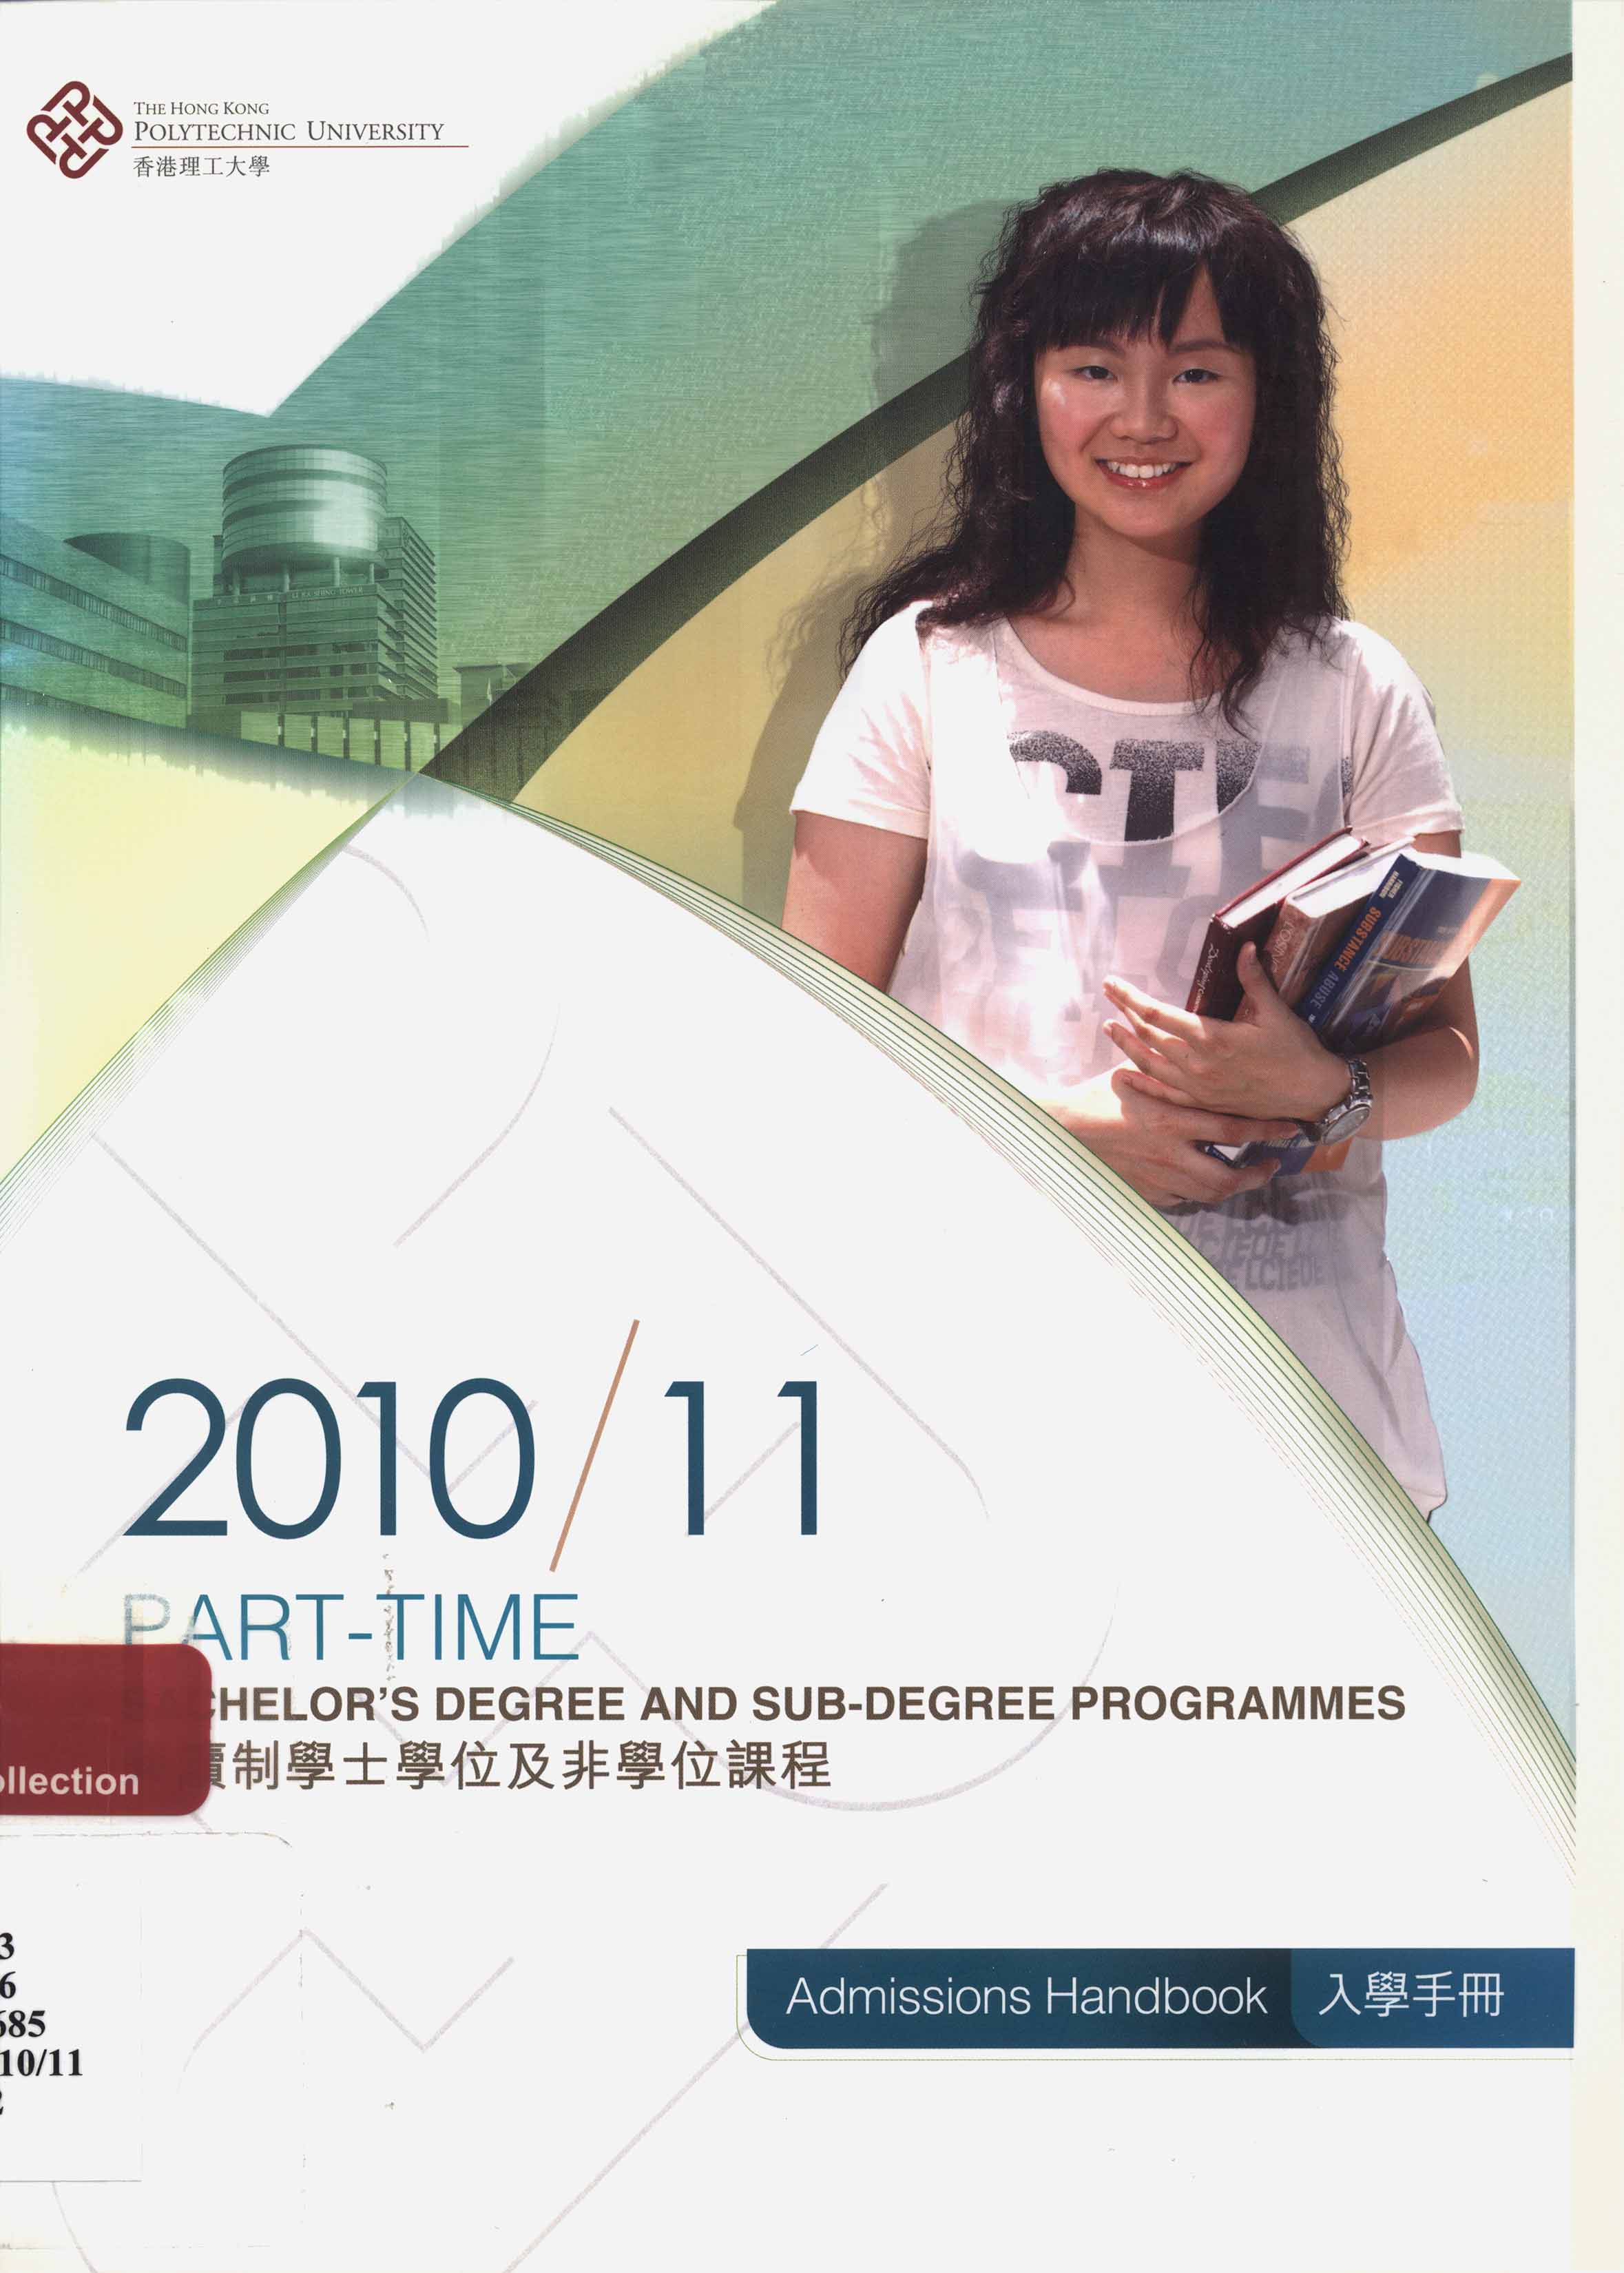 Hong Kong Polytechnic University. Prospectus. Part-time Bachelor's degree and sub-degree programmes 2010/11